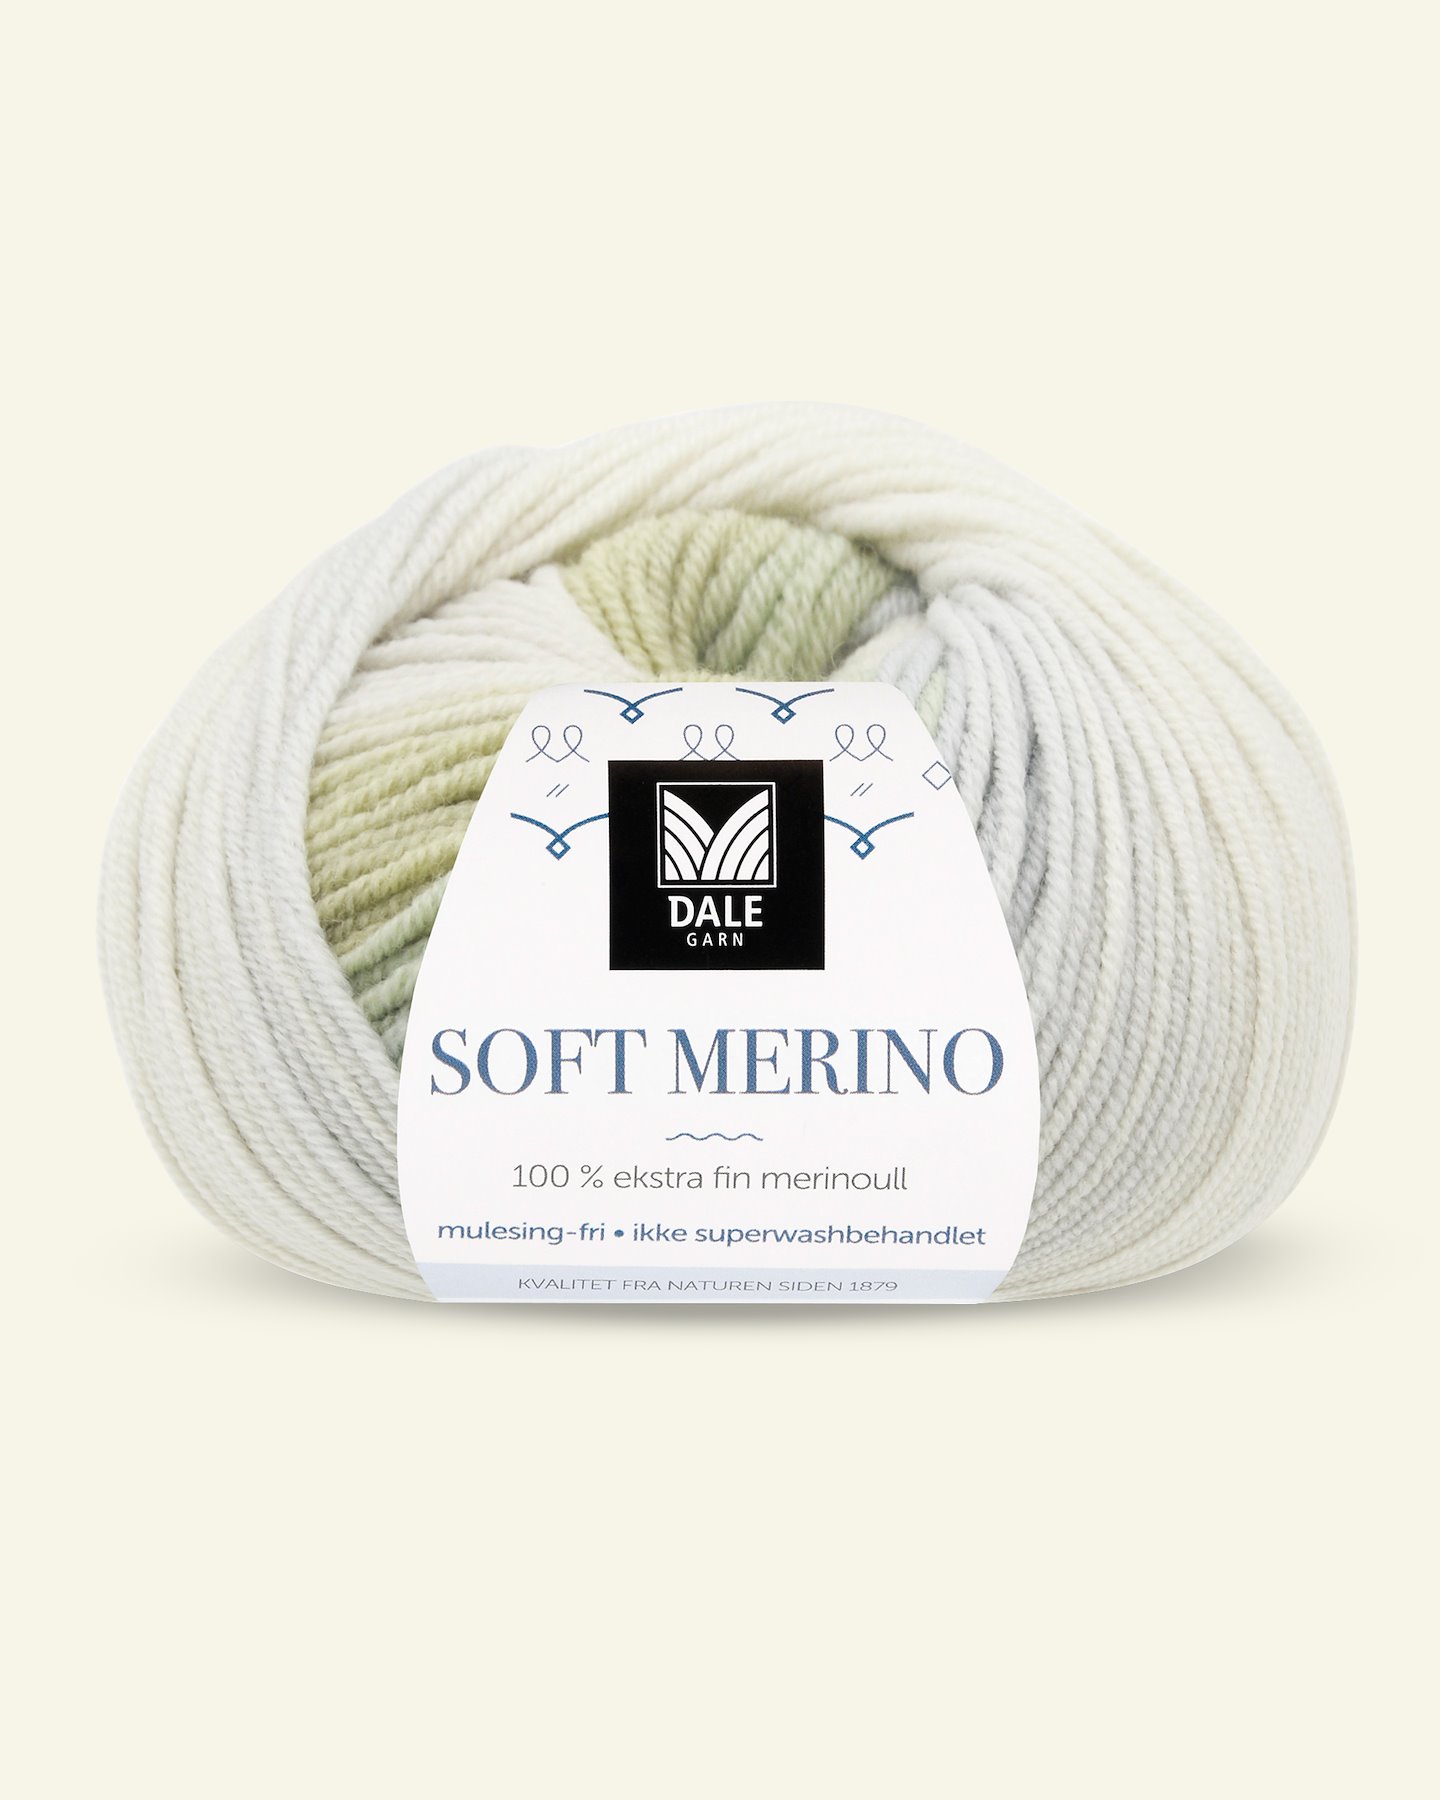 Dale Garn, 100% extra fine merino wool yarn "Soft Merino", mint printed 90001223_pack